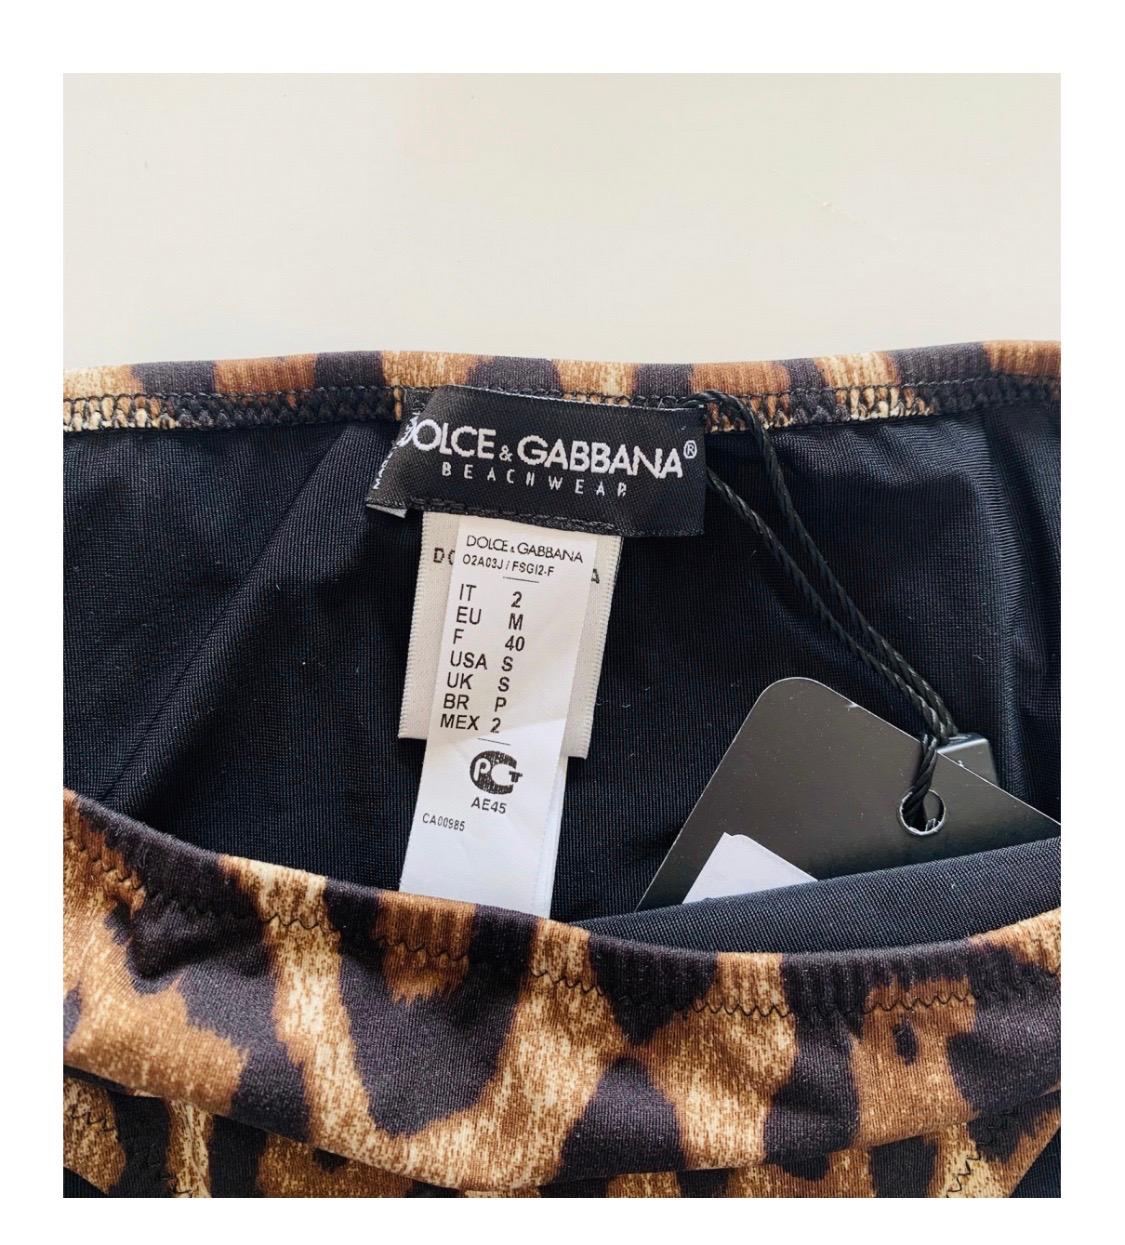 Black Dolce & Gabbana classic leopard
printed balconette bra swimwear set